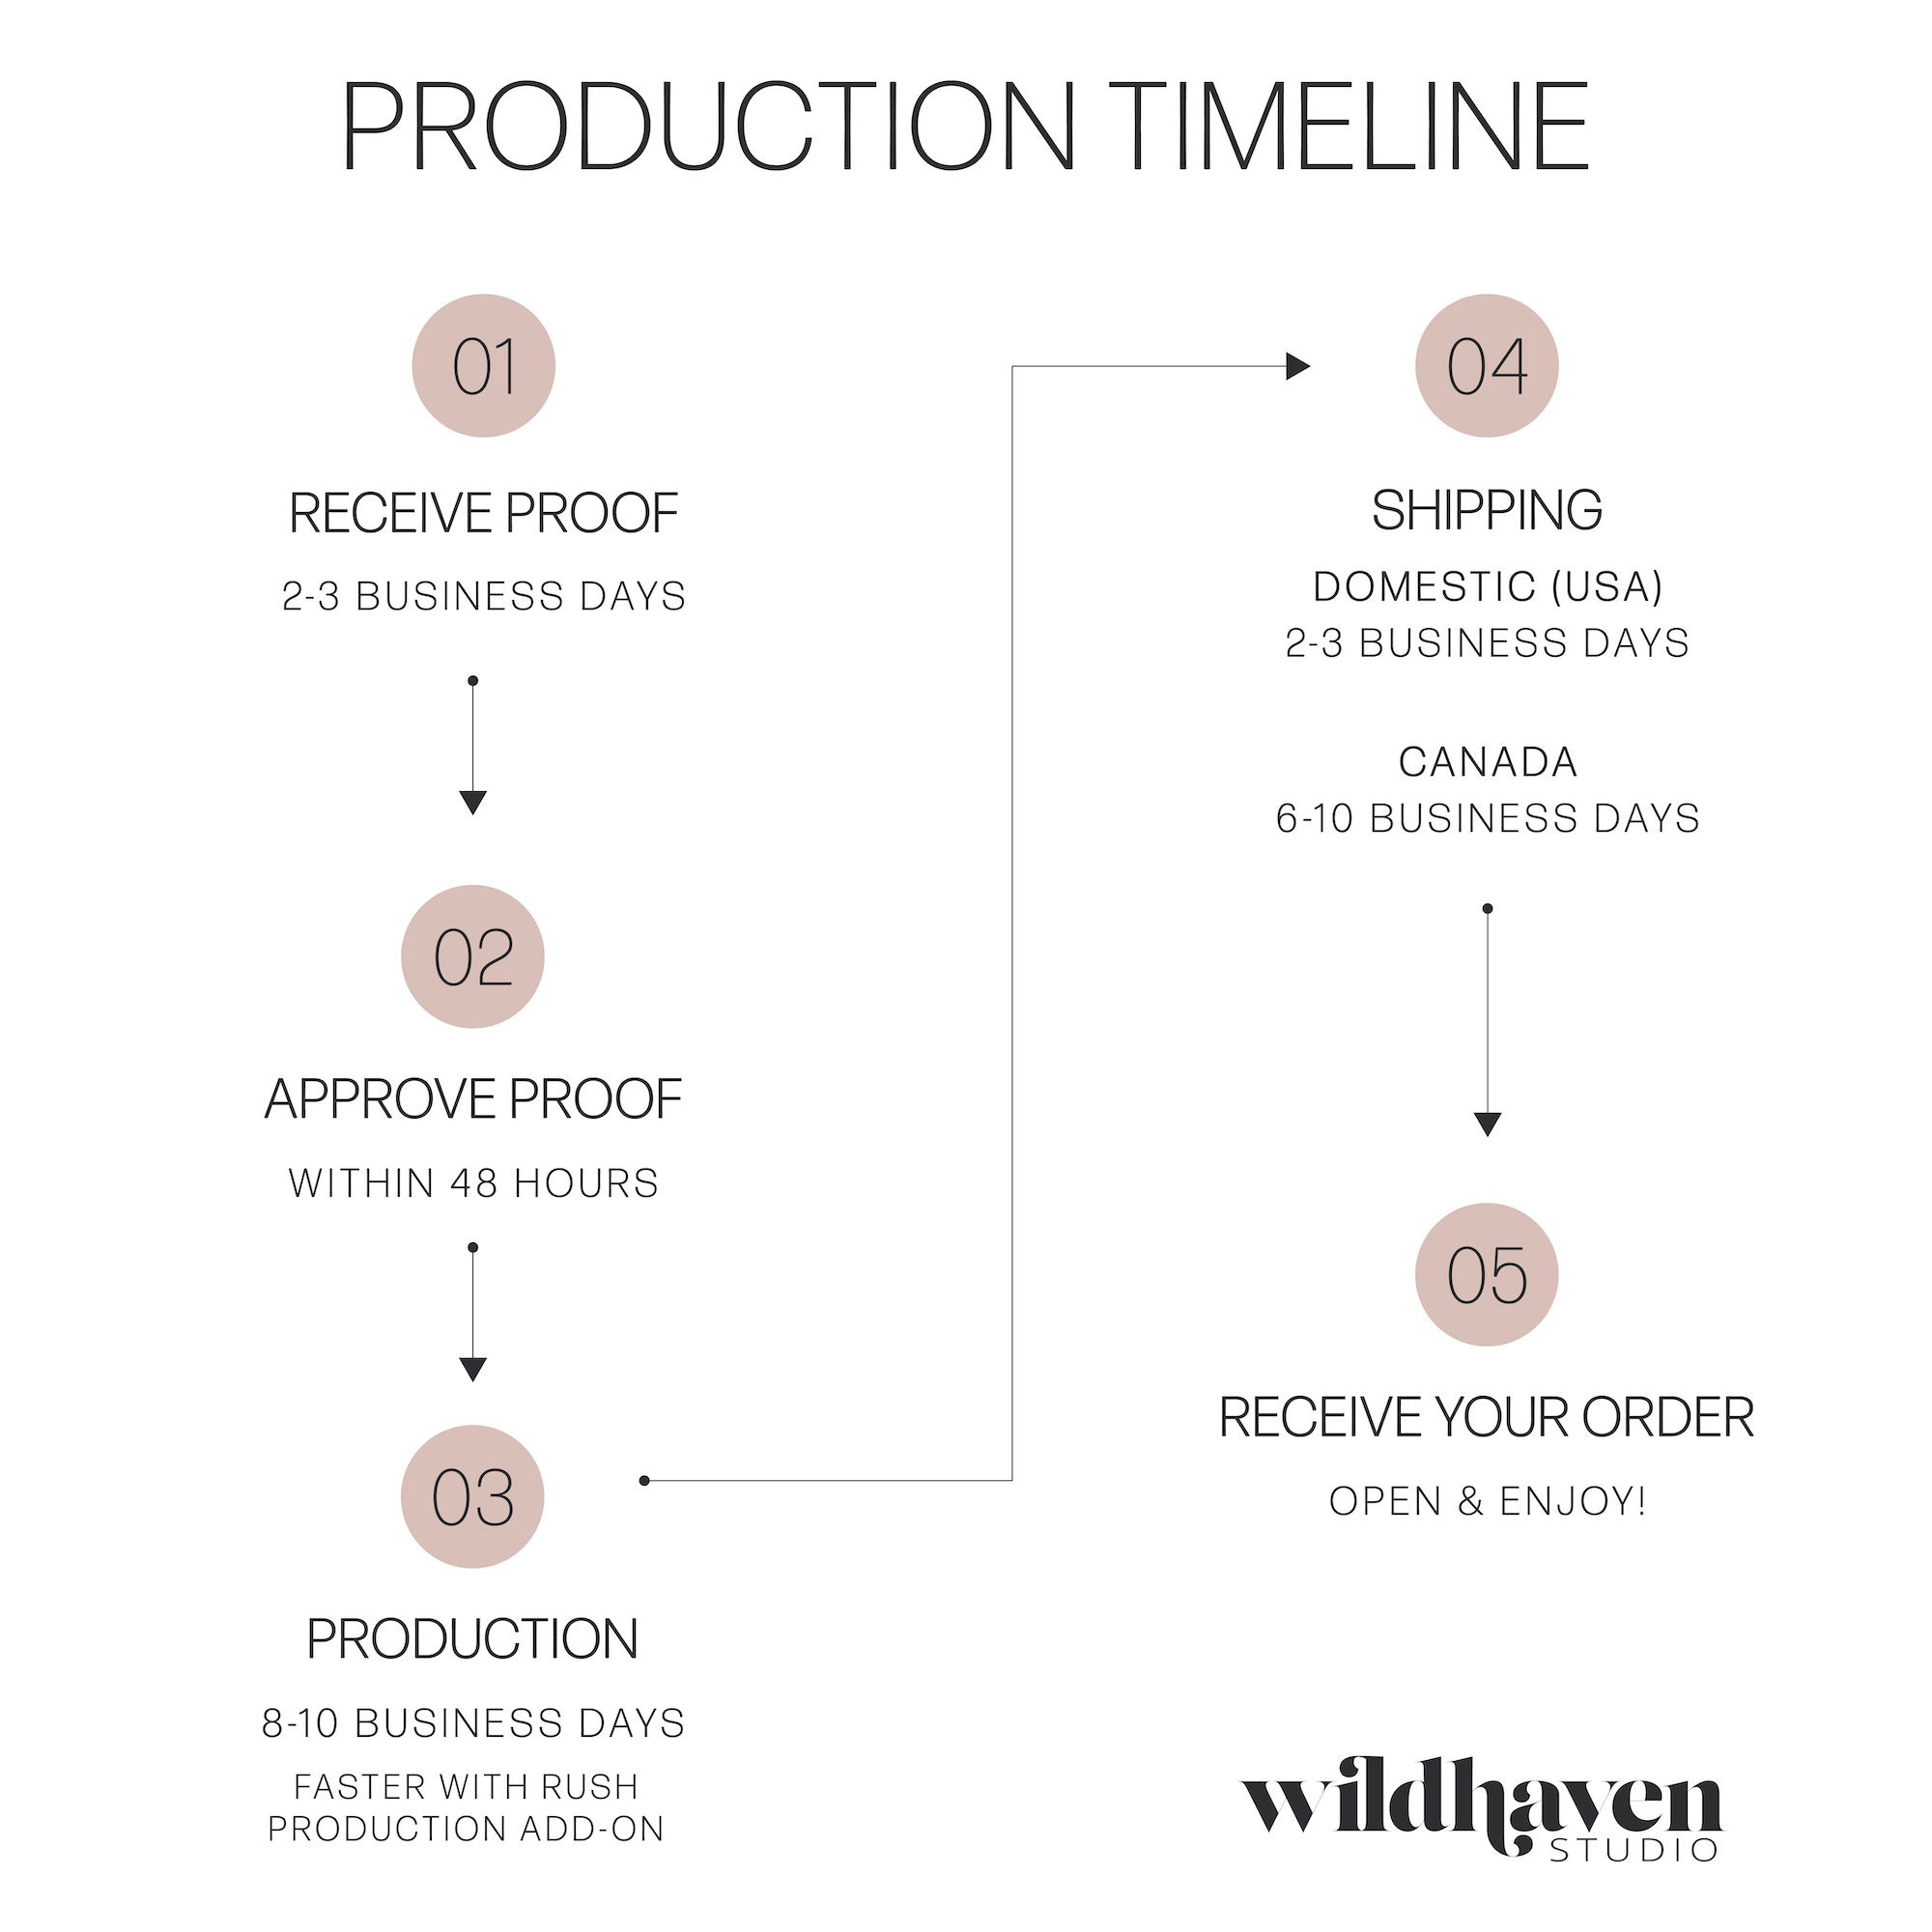 wildhaven studio production timeline